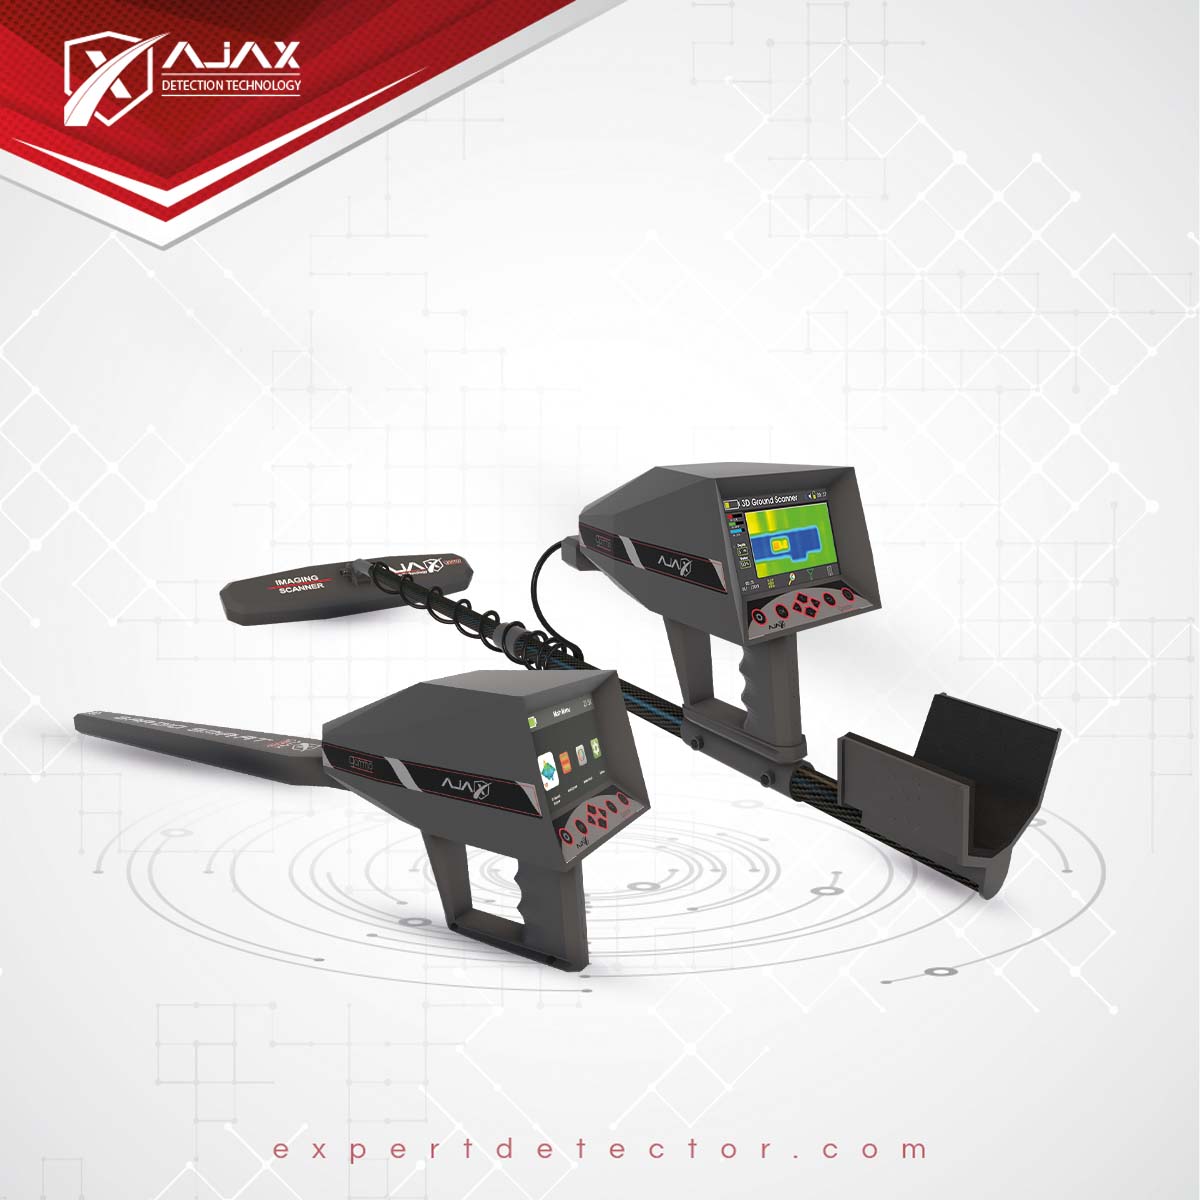 Ajax gamma metal detector